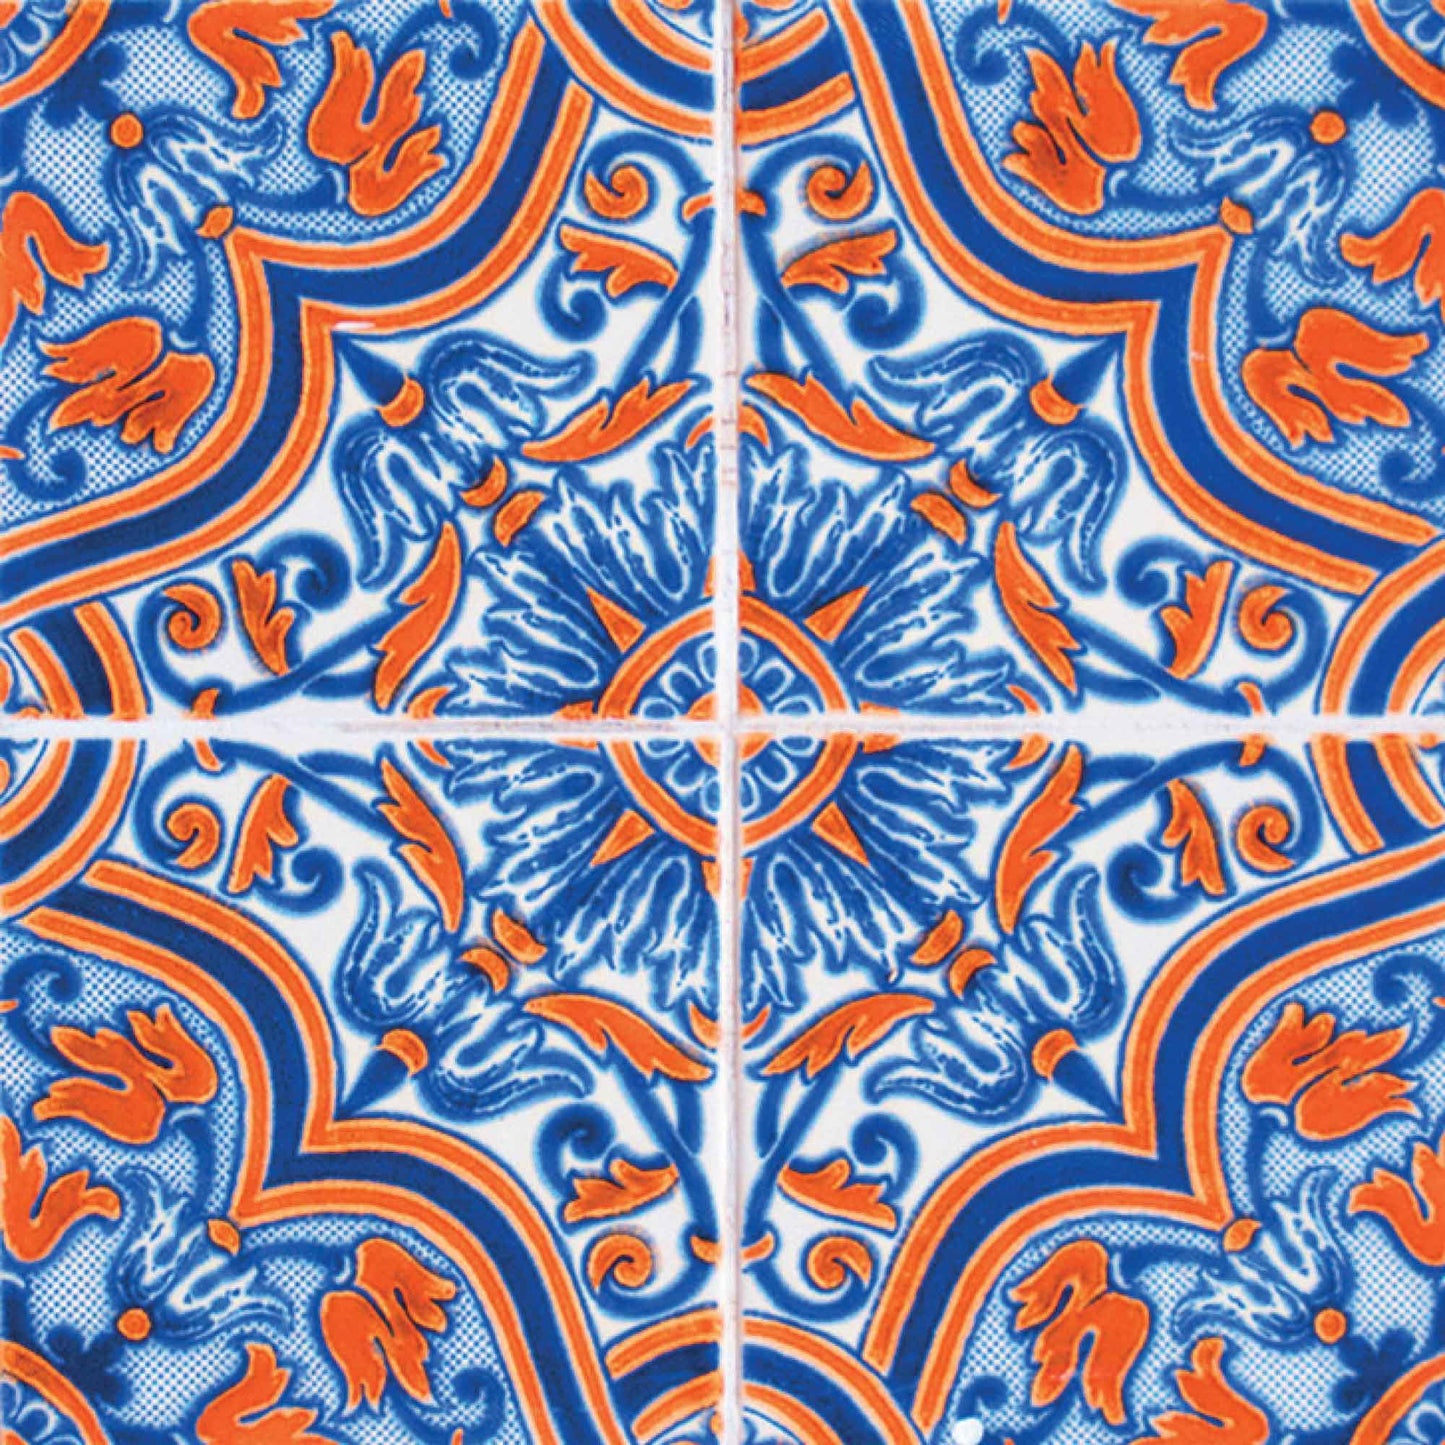 7" X 7" Blue Warm Tones Mosaic Peel and Stick Tiles